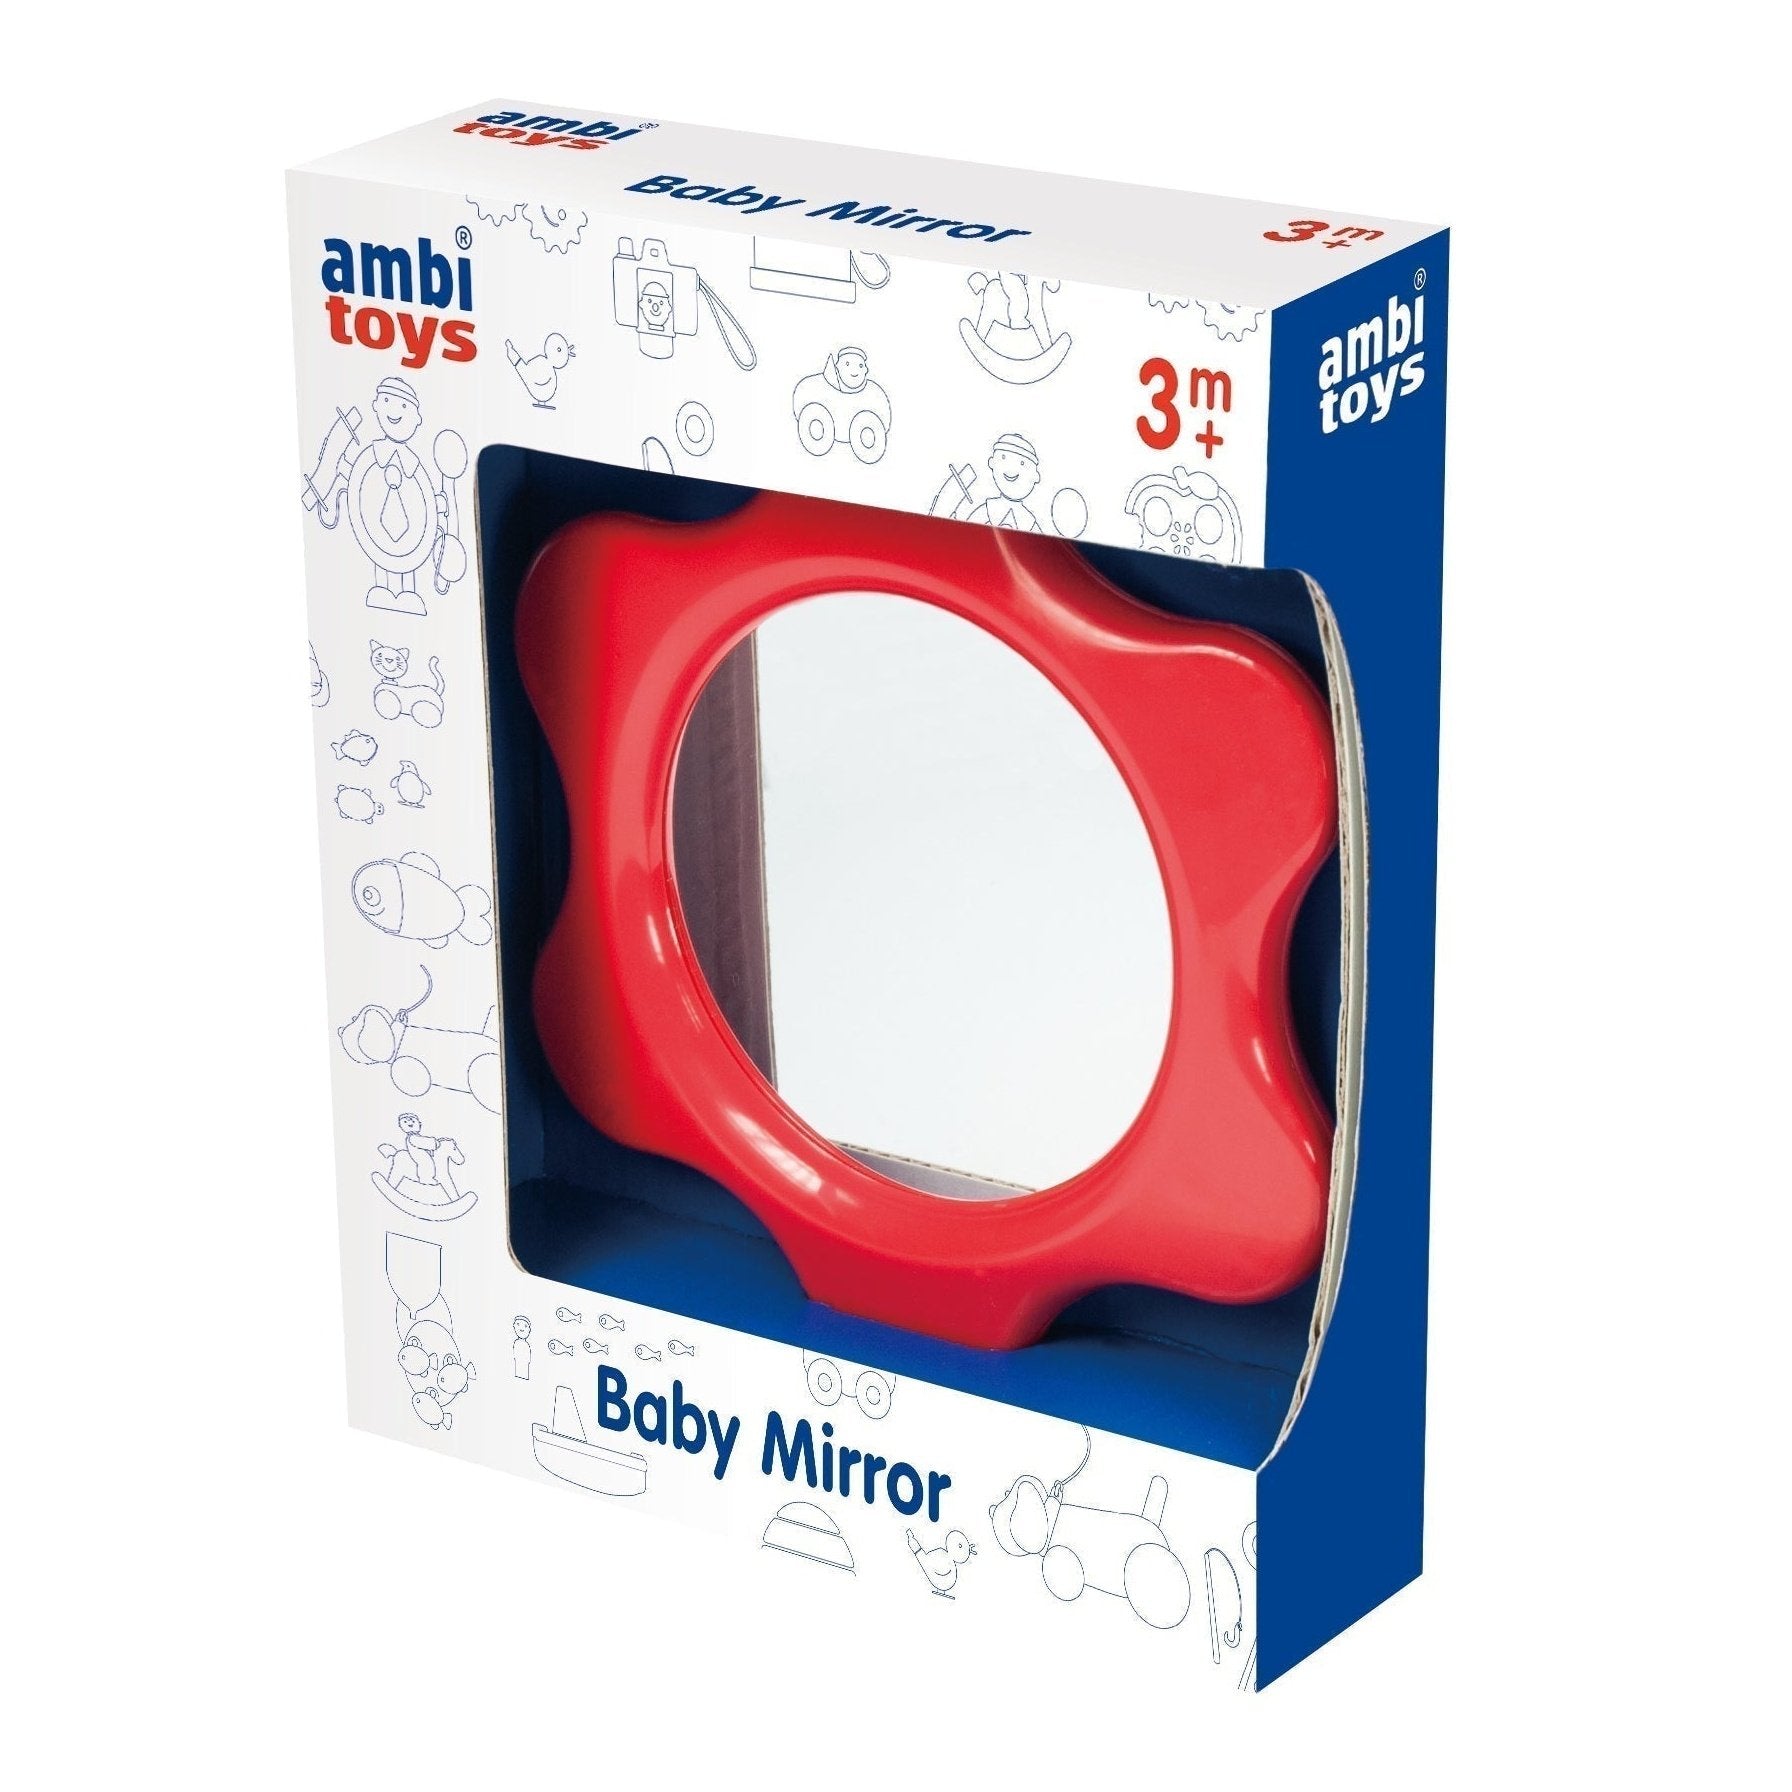 Ambi - Baby Mirror - Toybox Tales